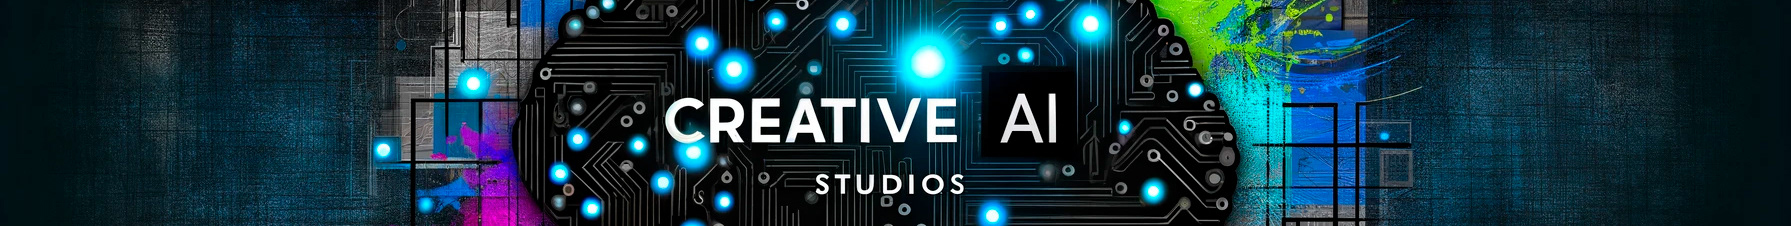 Baner profilu użytkownika Creative AIStudios